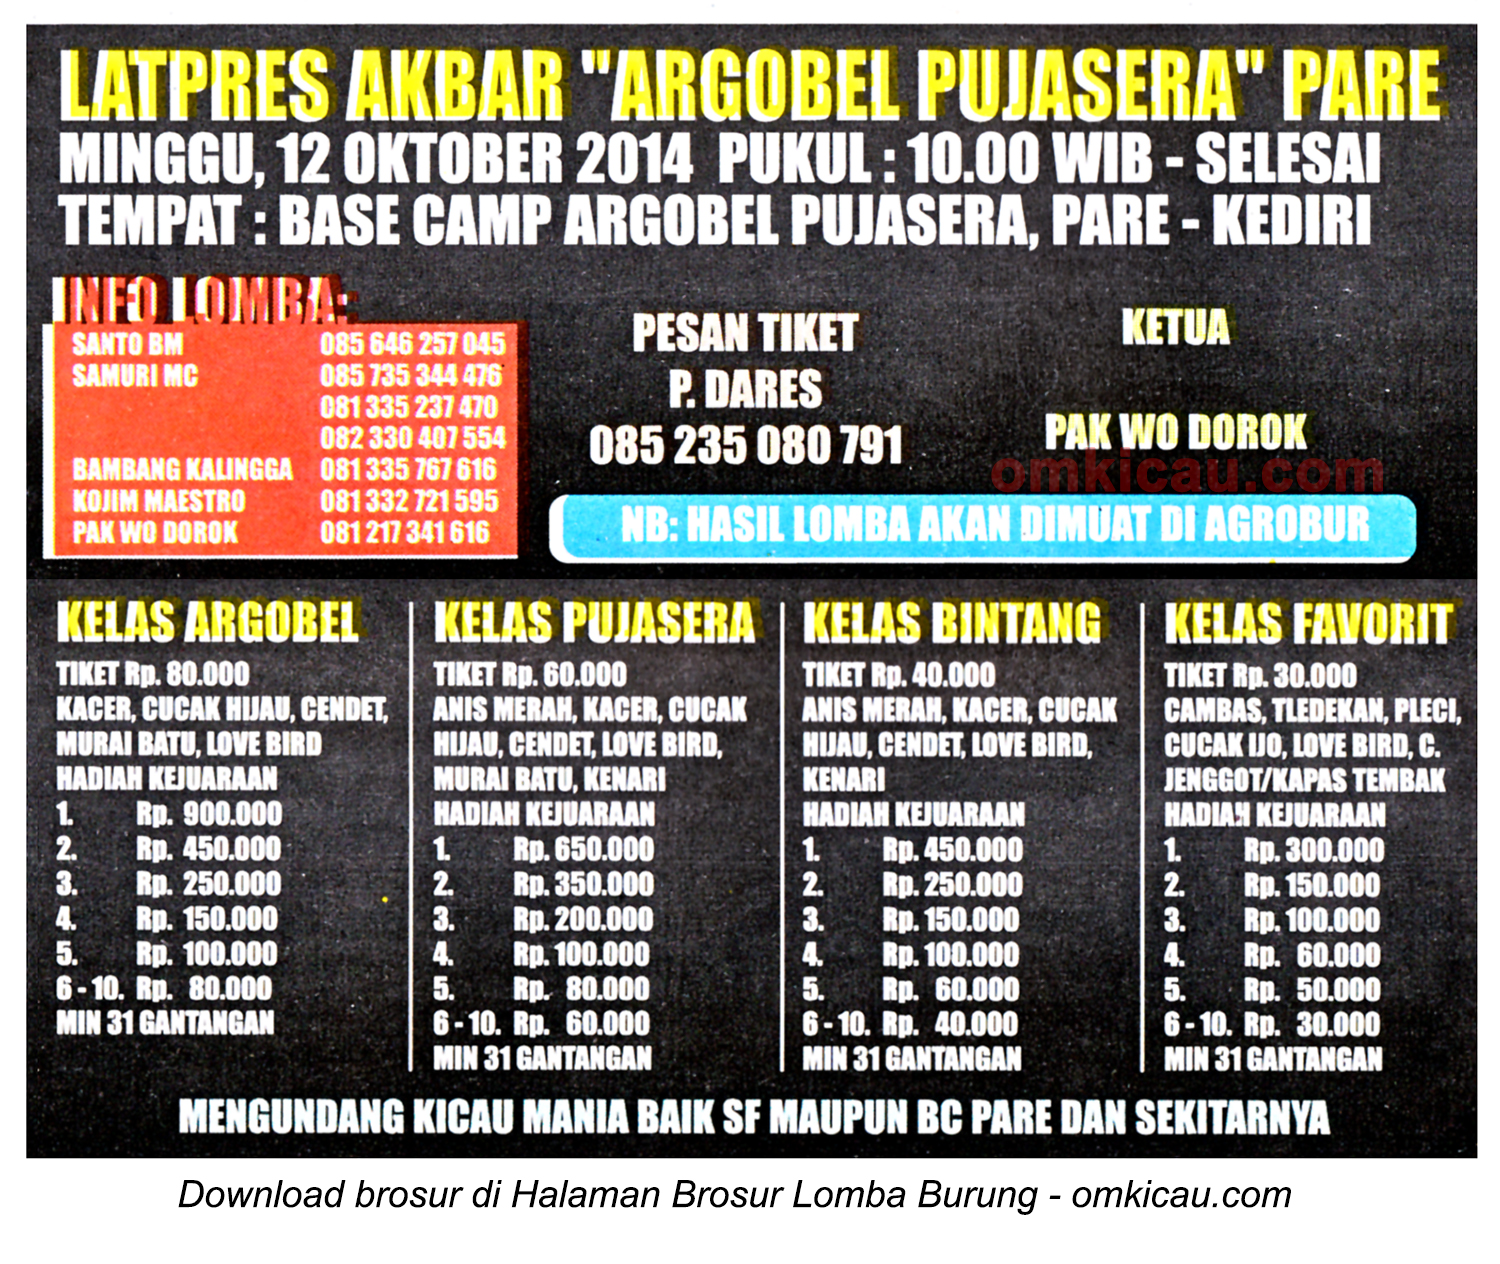 Brosur Latpres Akbar Argobel Pujasera Pare, Kediri, 12 Oktober 2014